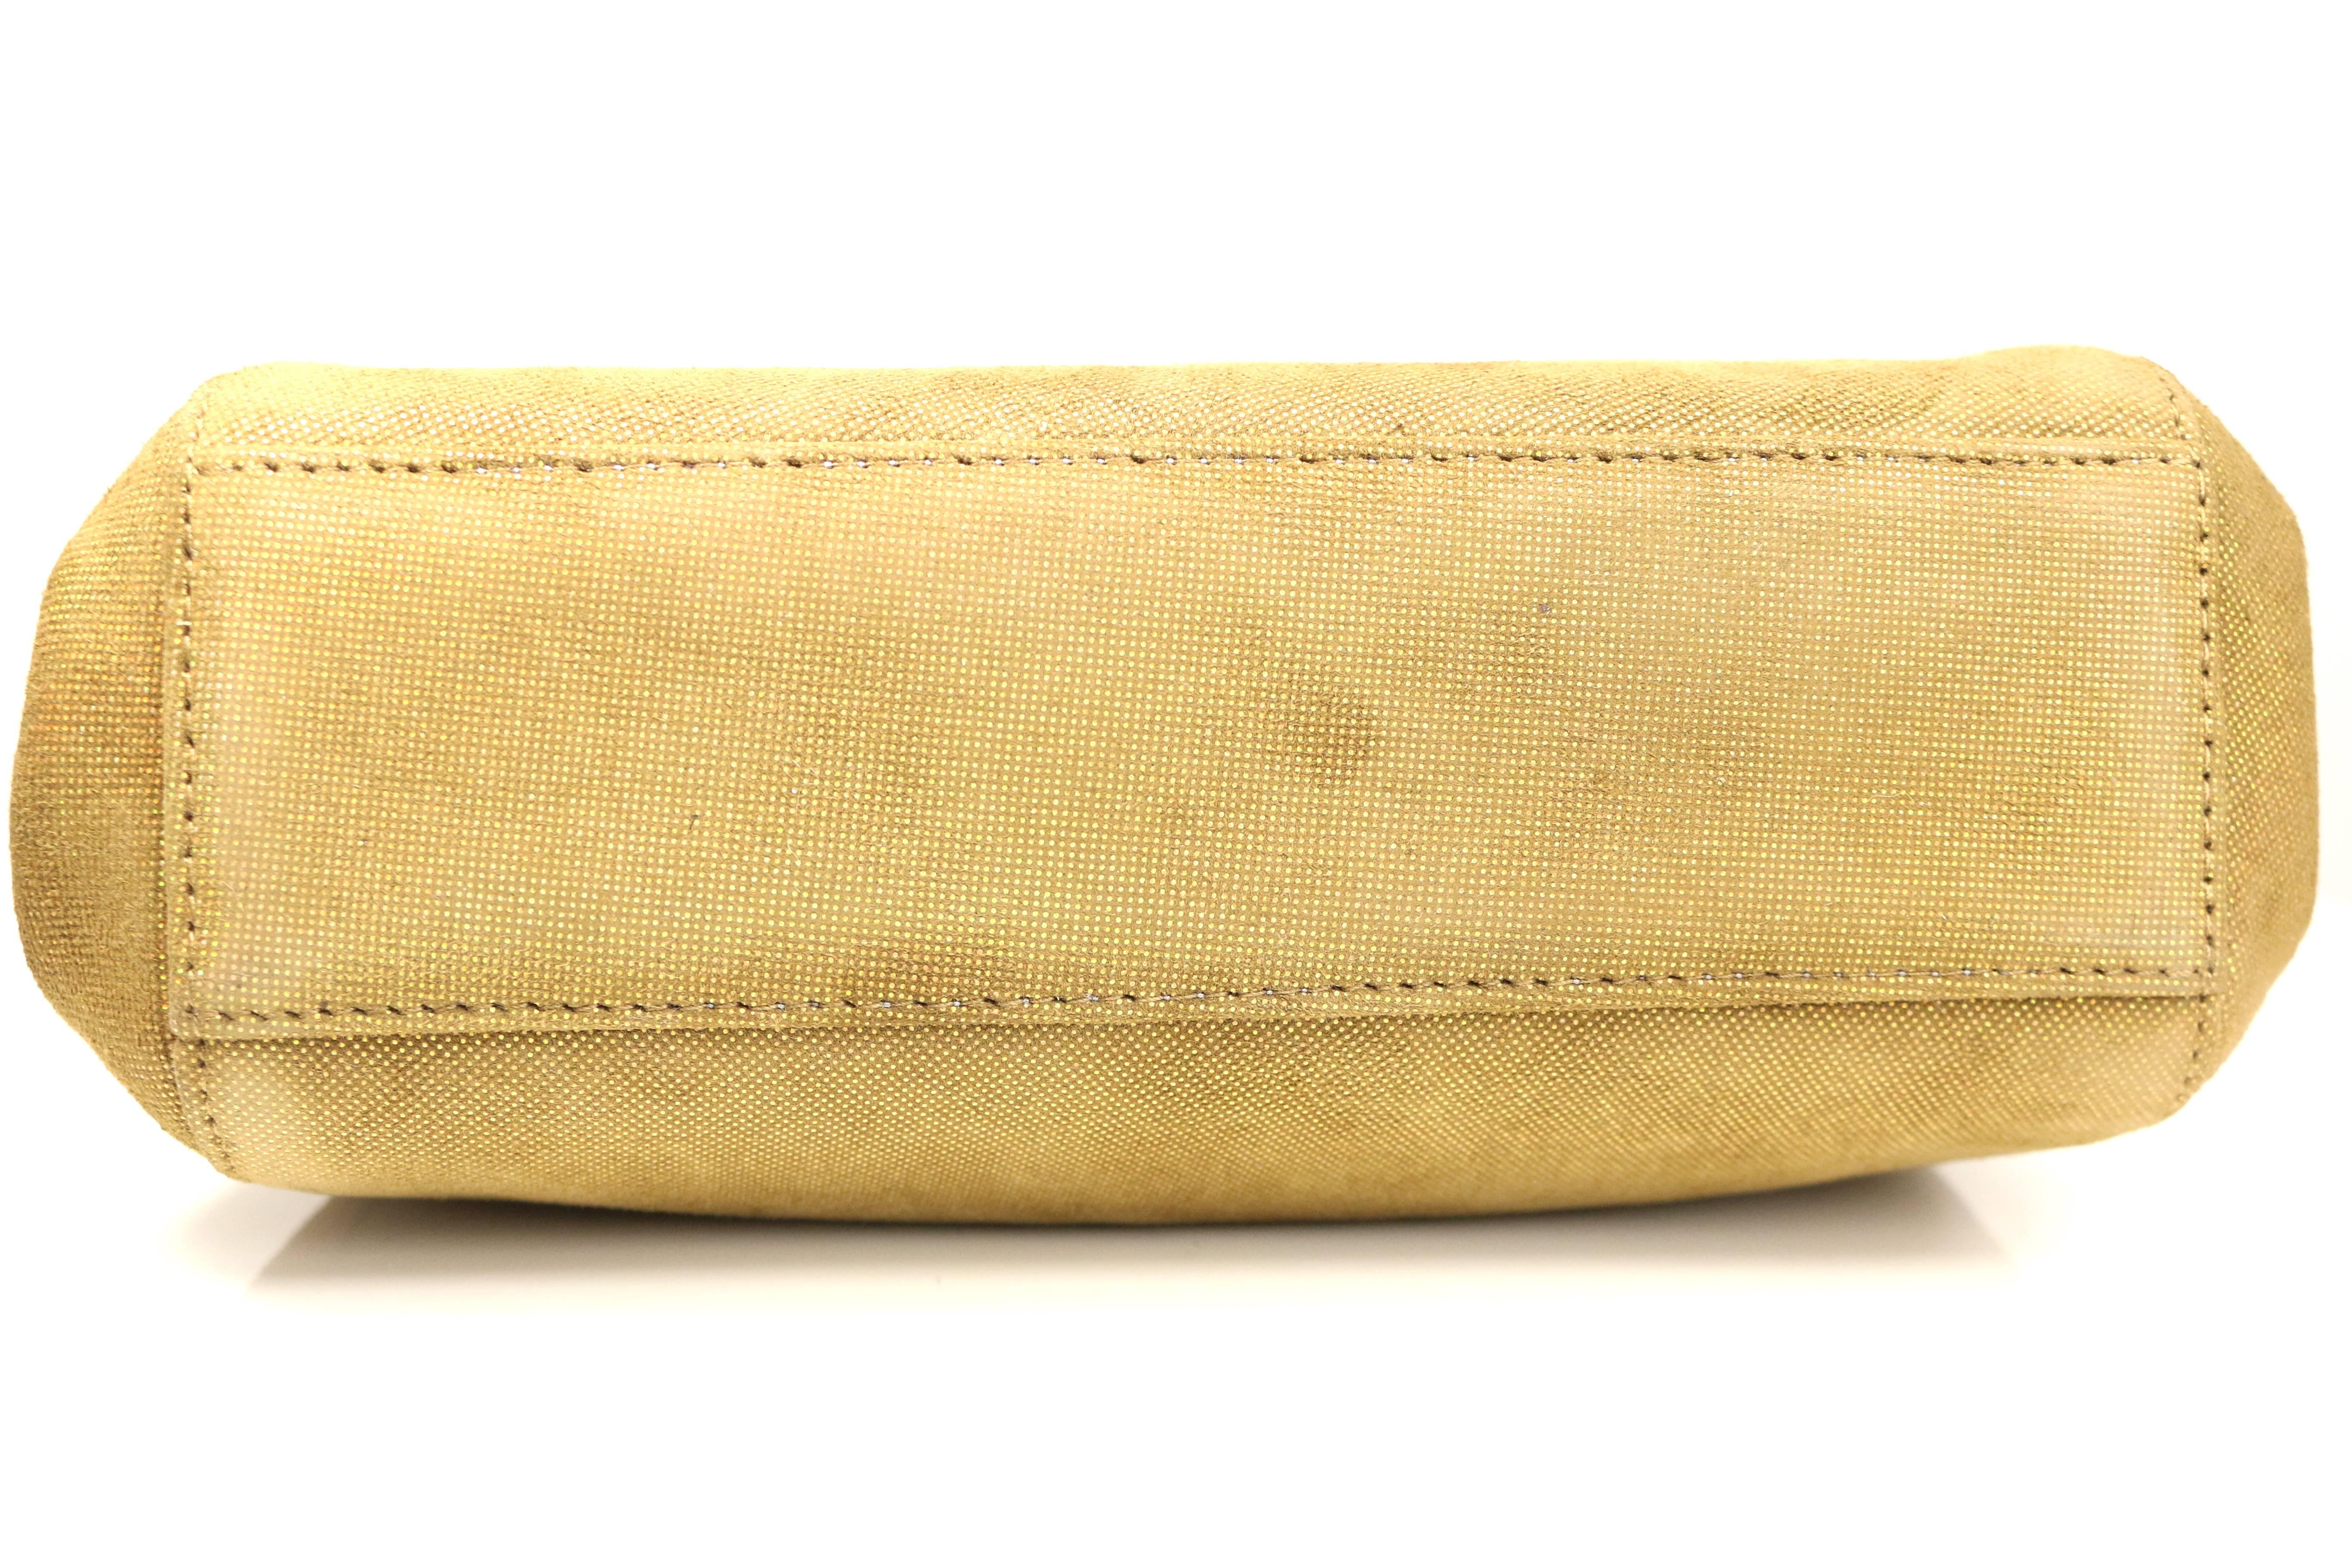 Chanel Gold Metallic Suede Small Handbag  2